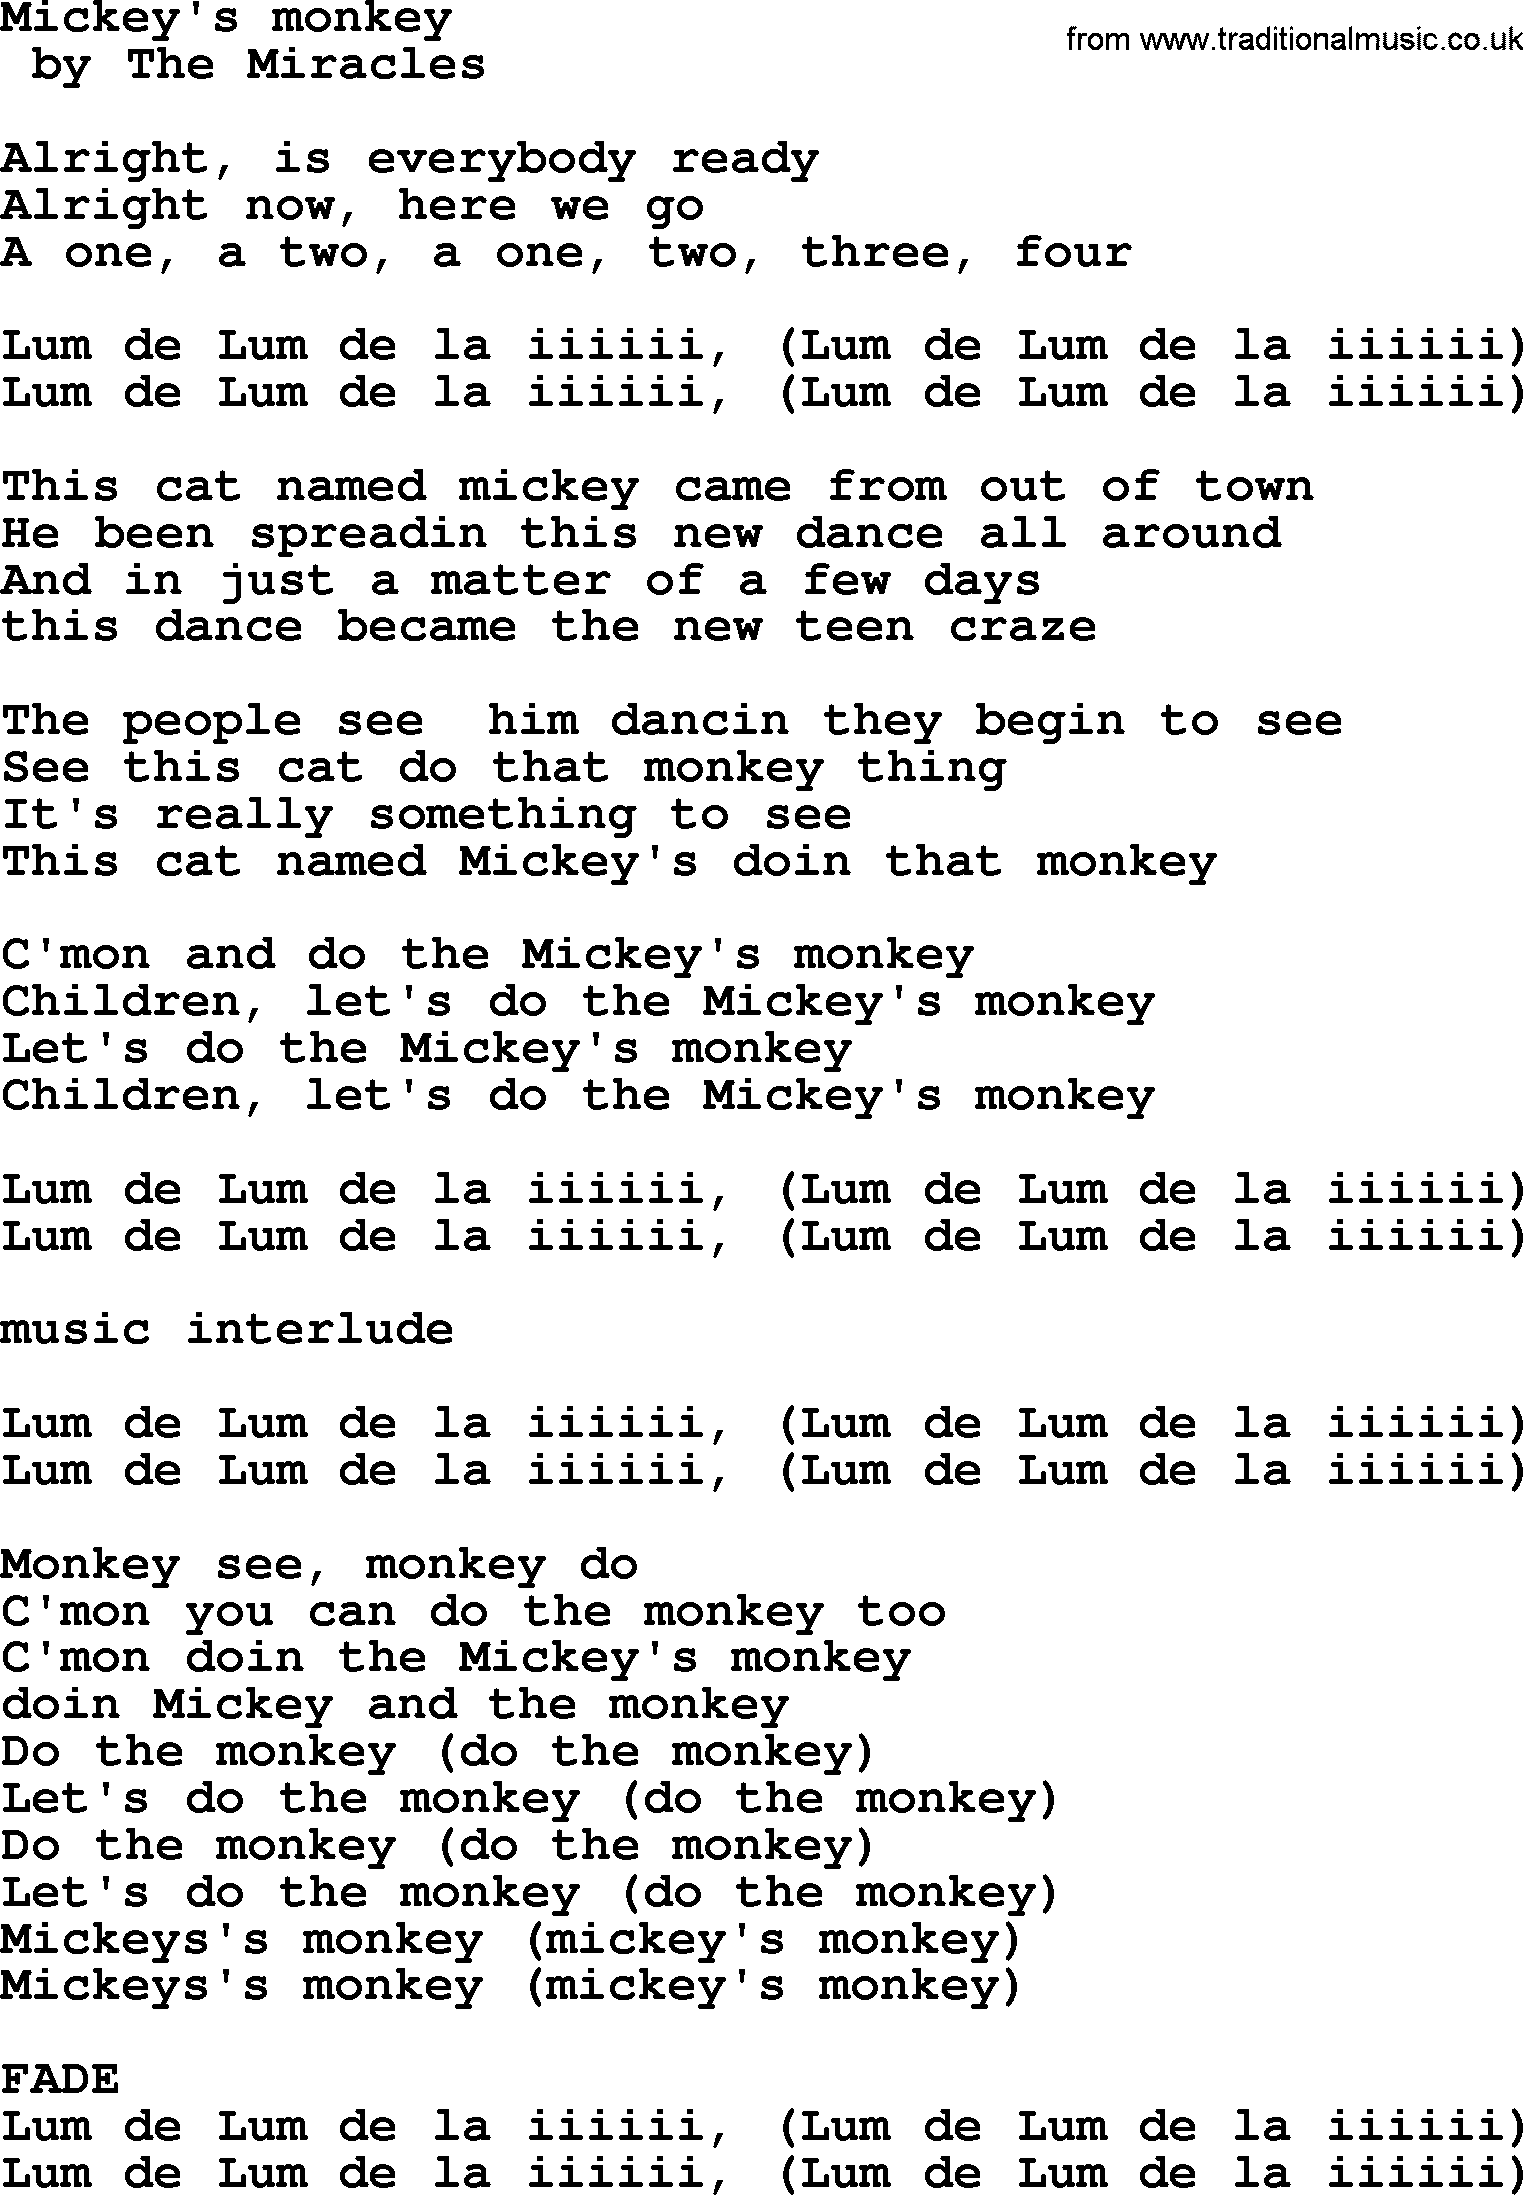 Bruce Springsteen song: Mickey's Monkey lyrics